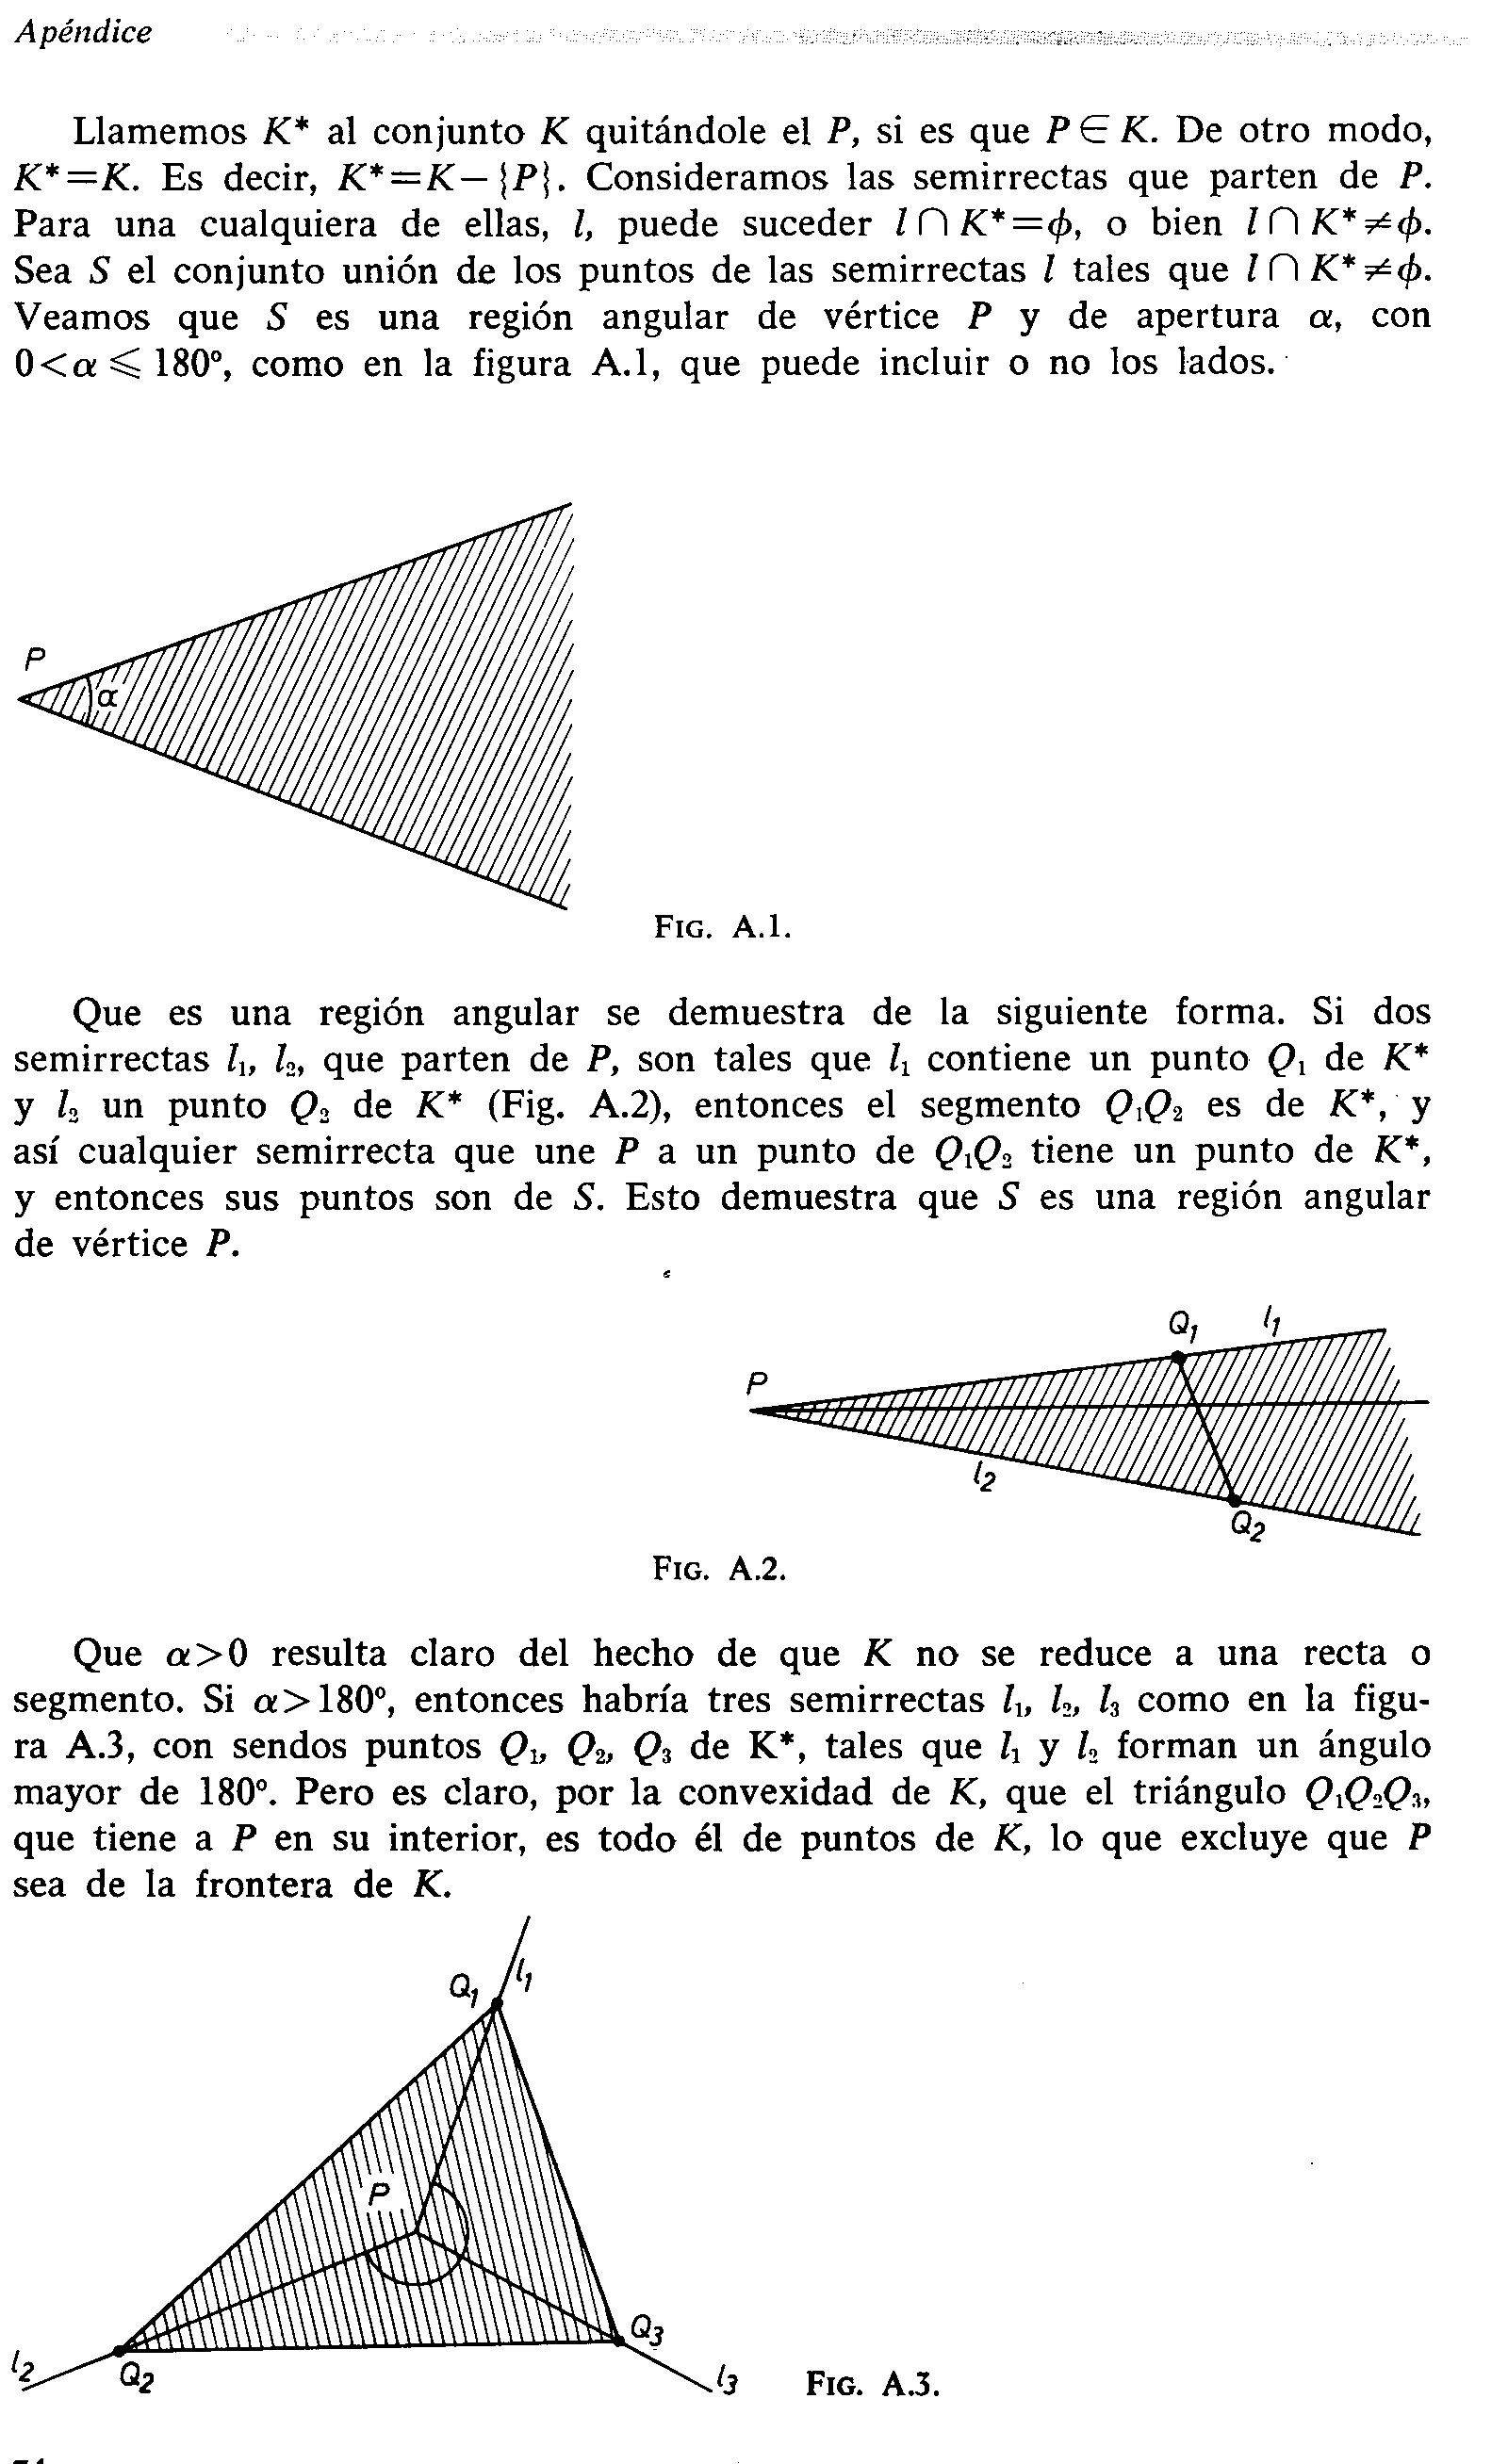 Graphics (p.10-1)